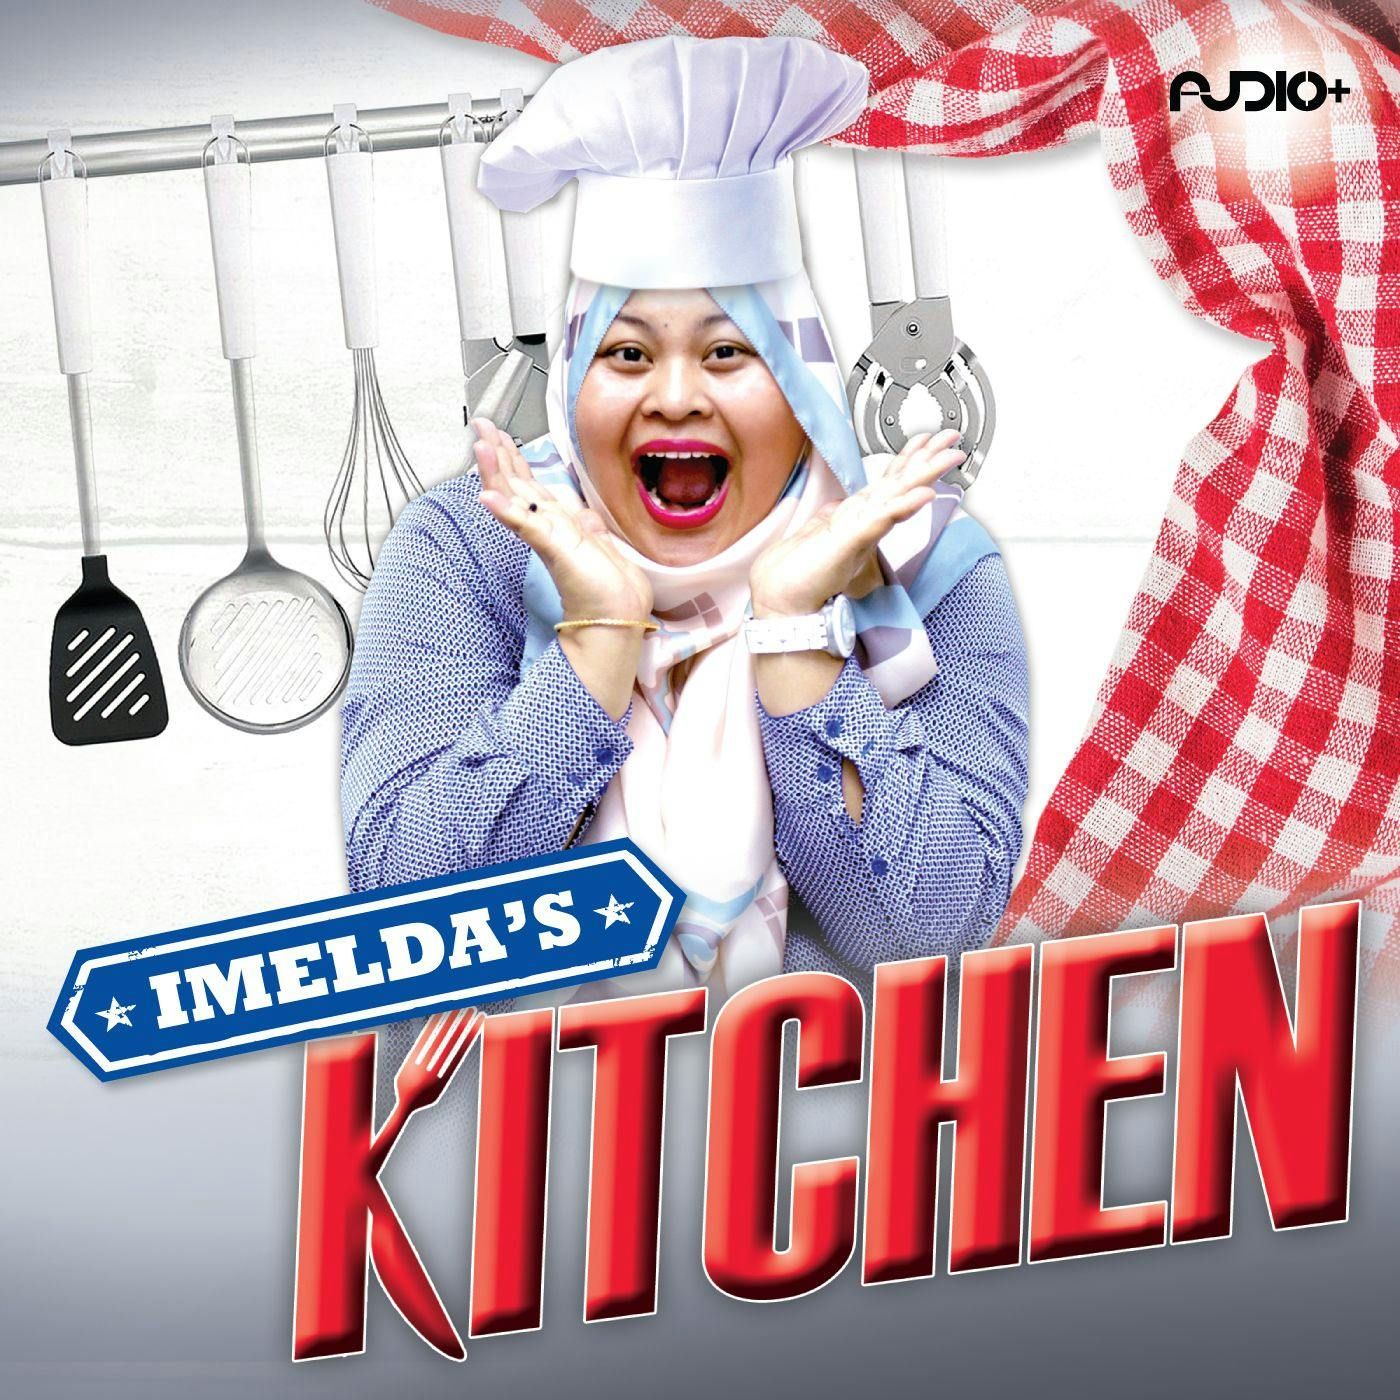 Imelda's kitchen